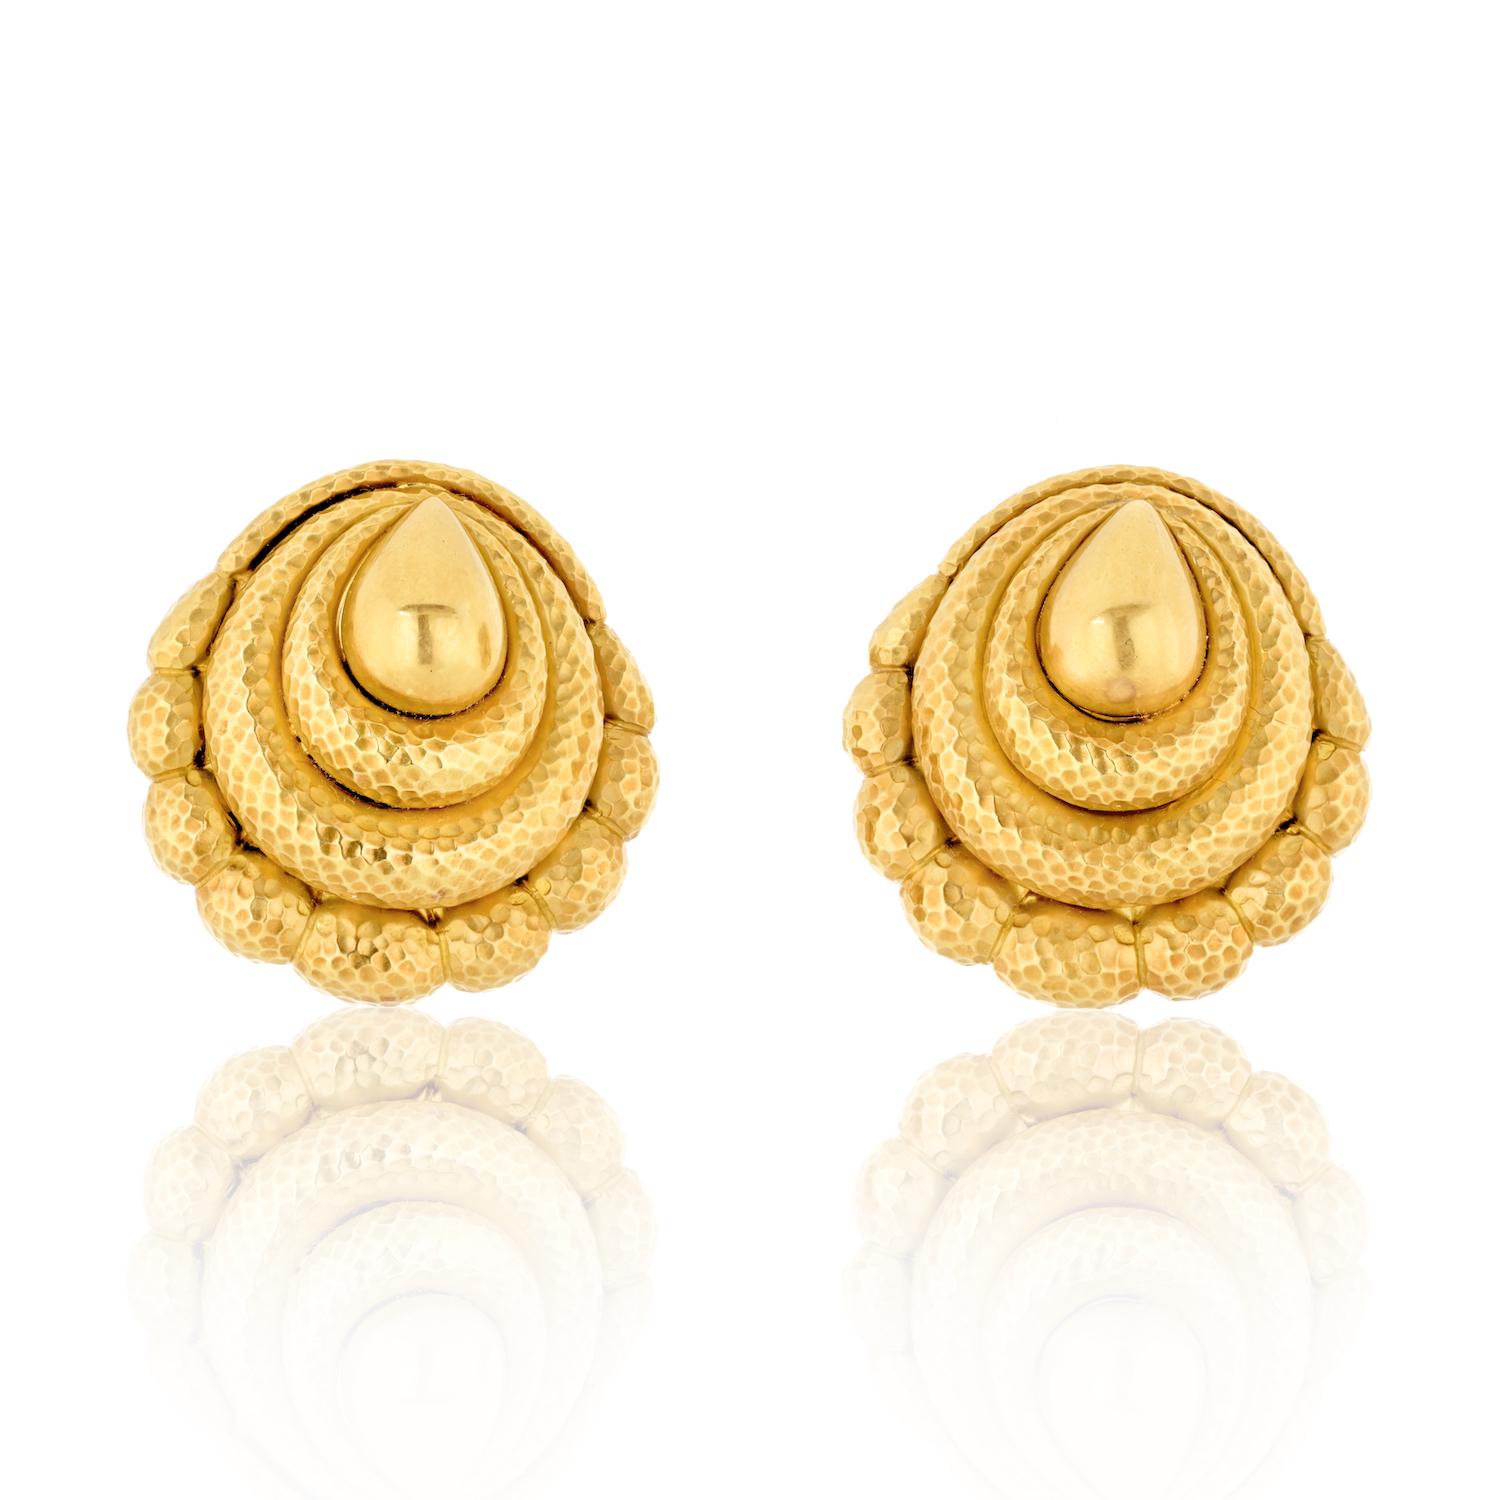 Long Gold Earrings - Buy Long Gold Earrings Online Starting at Just ₹114 |  Meesho